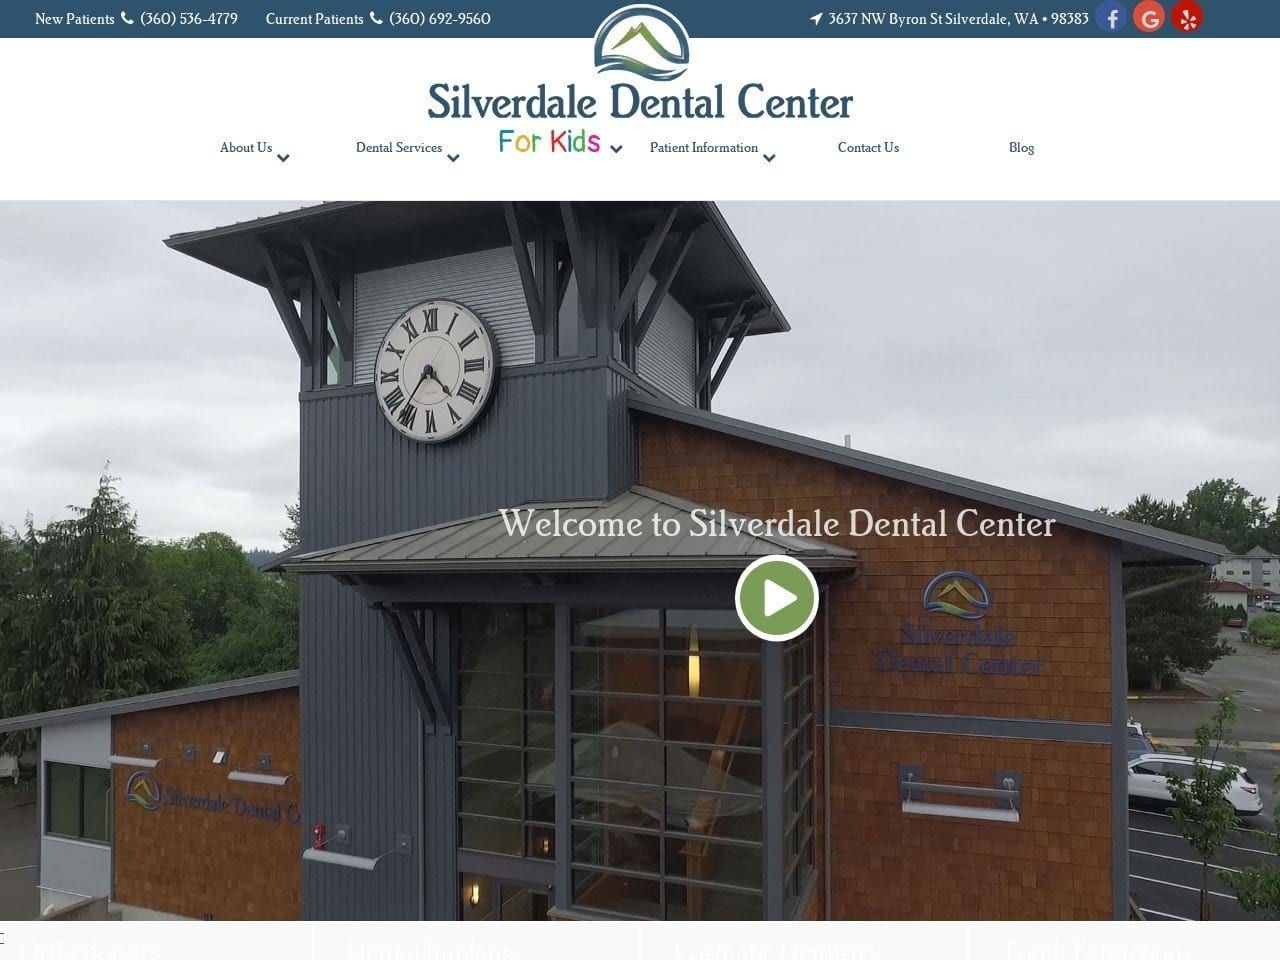 Silverdale Dental Center Website Screenshot from silverdaledentalcenter.com